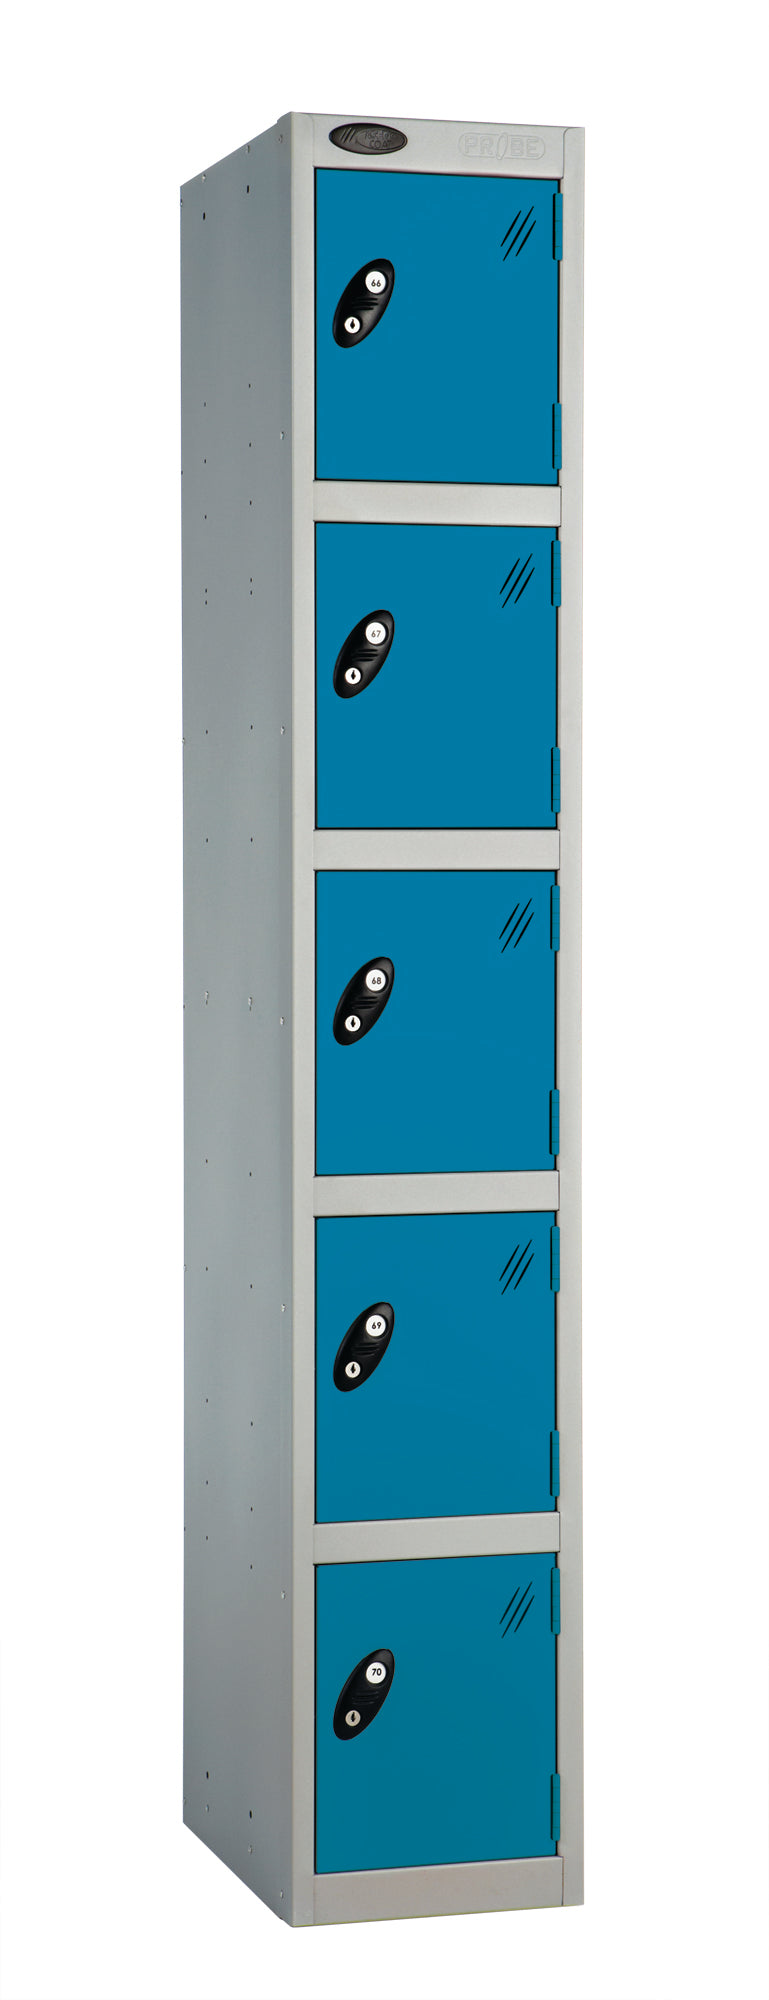 PROBEBOX STANDARD 1 NEST STEEL LOCKERS - ELECTRIC BLUE 5 DOOR Storage Lockers > Lockers > Cabinets > Storage > Probe > One Stop For Safety   